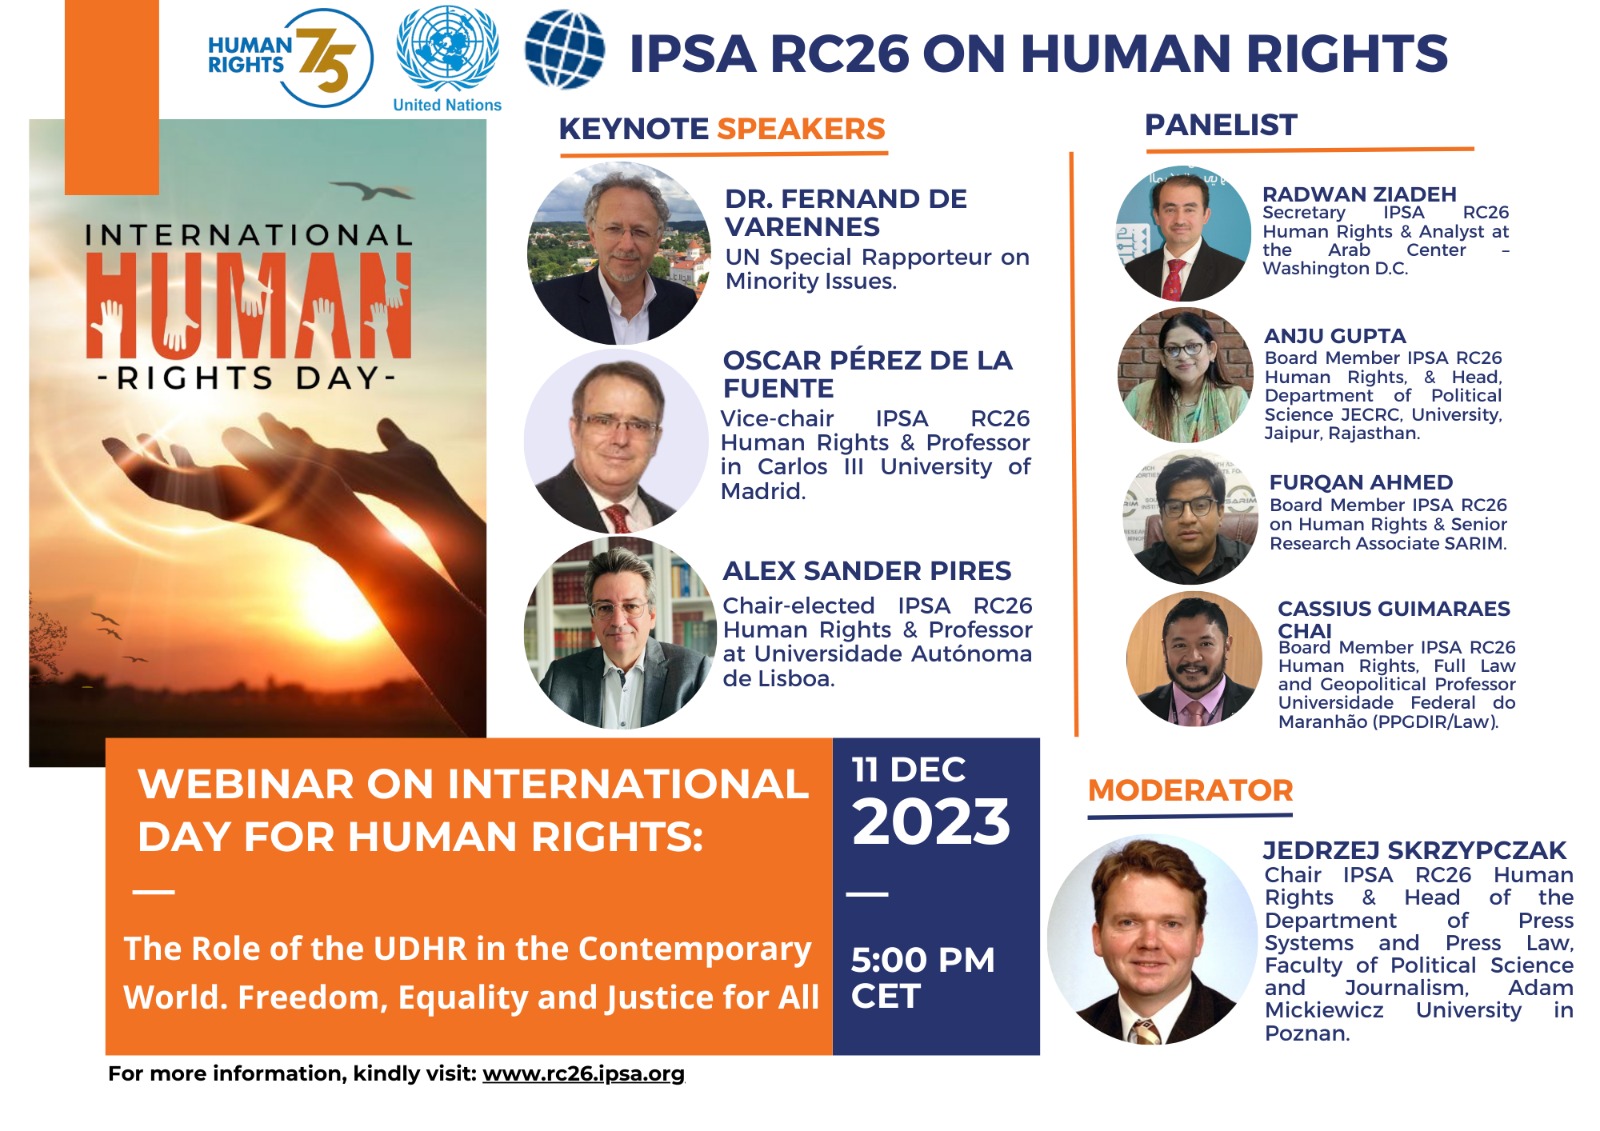 Human rights day 2023, Nov 2023